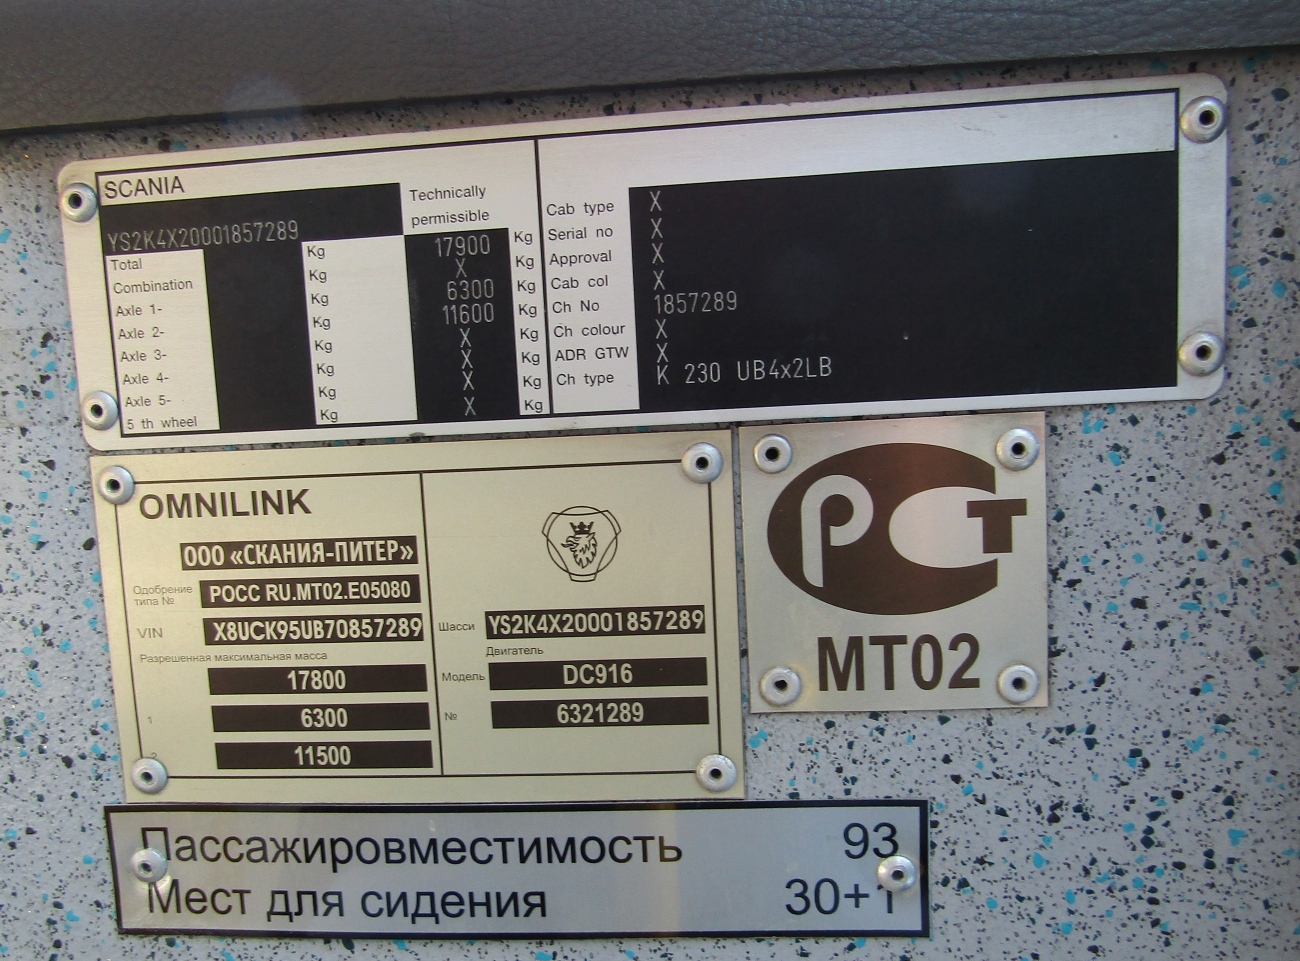 Ханты-Мансийский АО, Scania OmniLink II (Скания-Питер) № В 167 ОВ 186